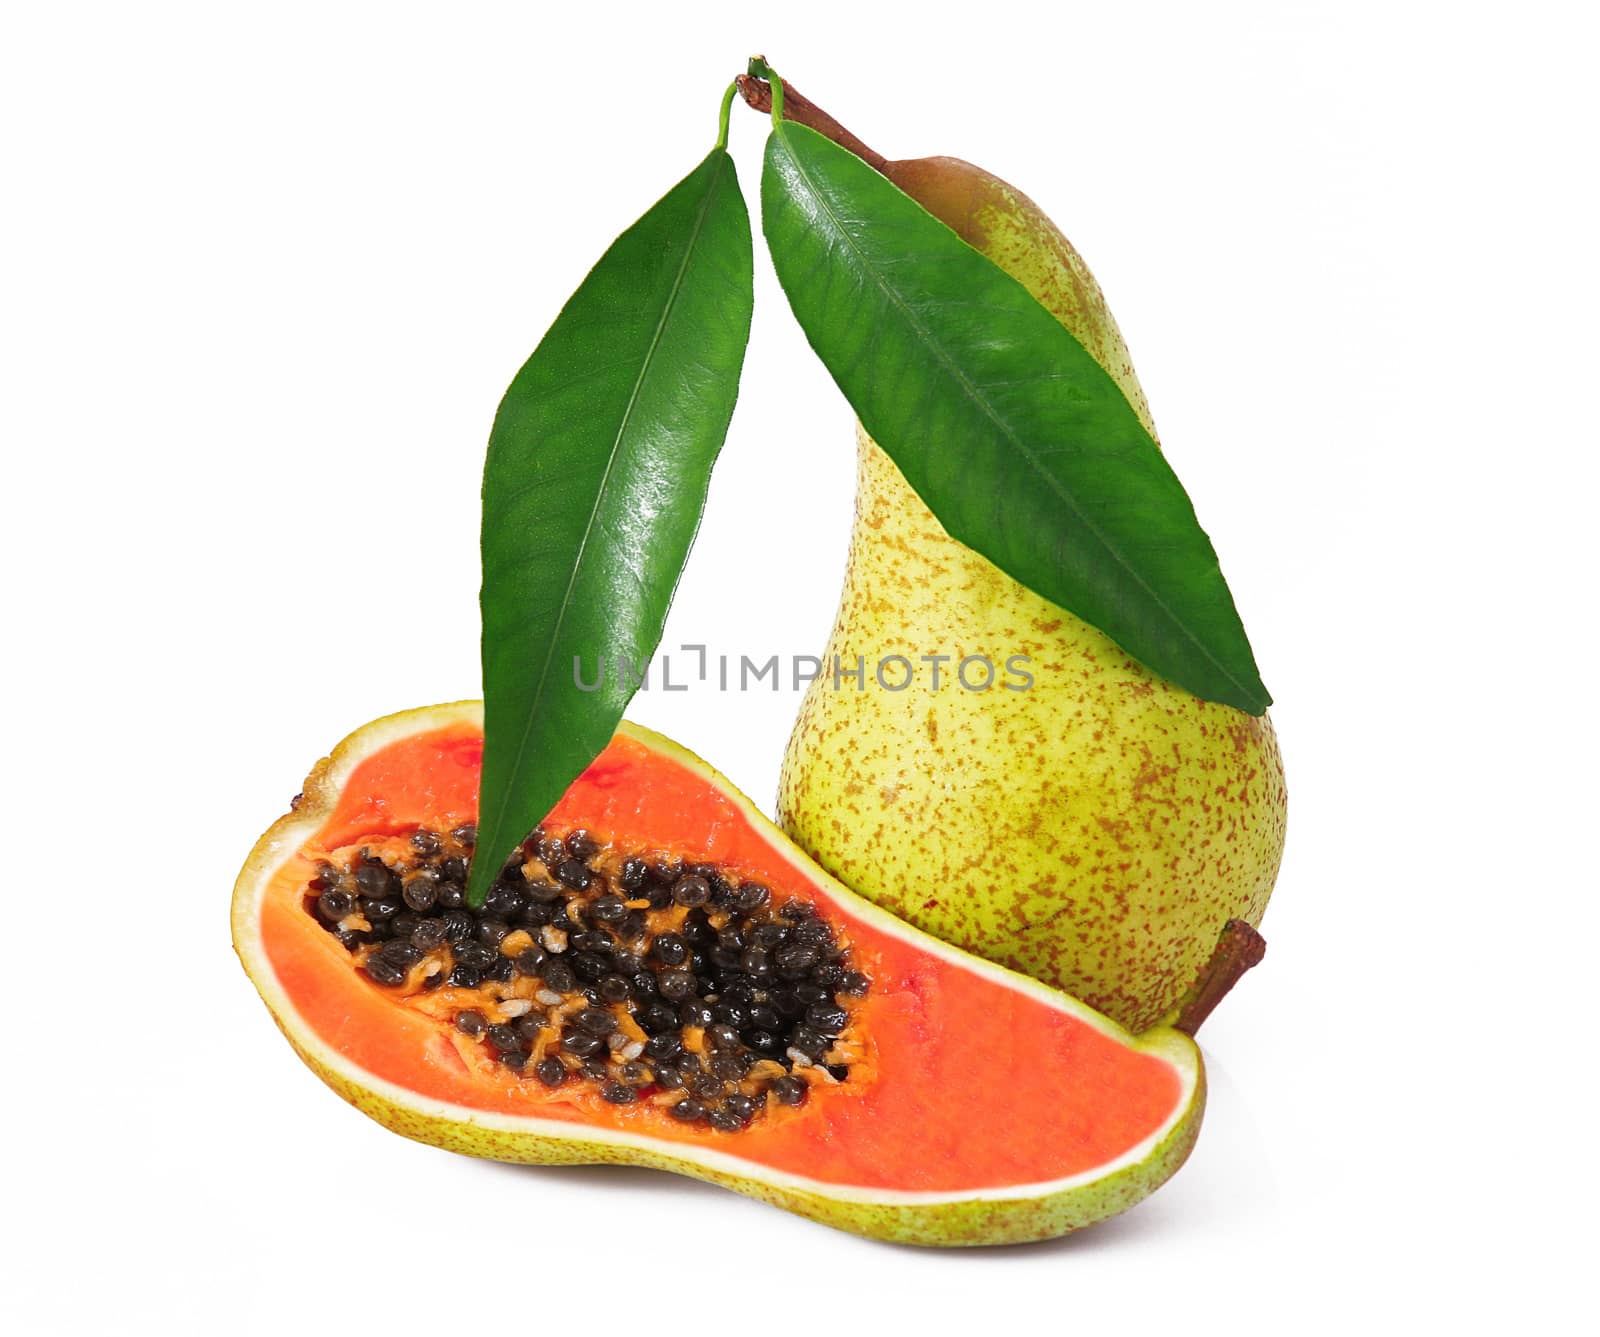 ibrid fruit pear-papaya by photobeps